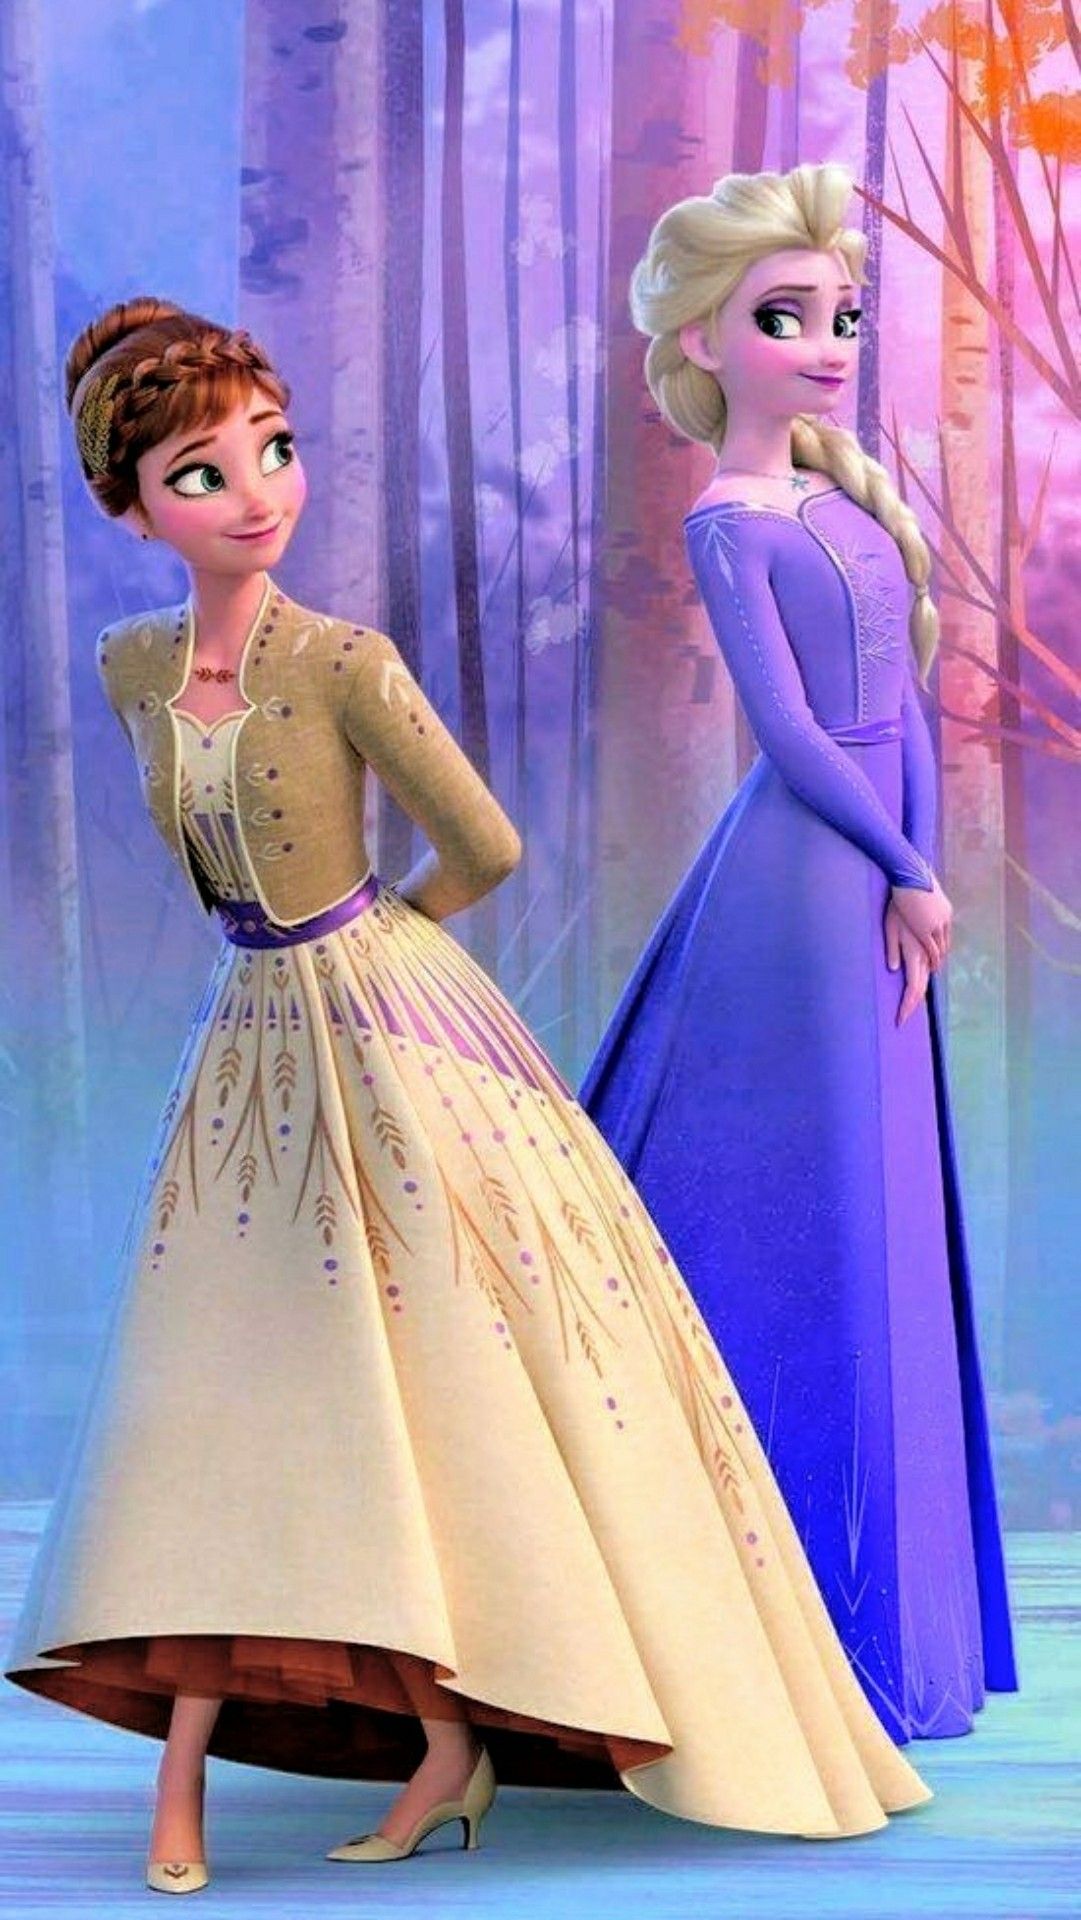 Disney Frozen 2 Wallpaper